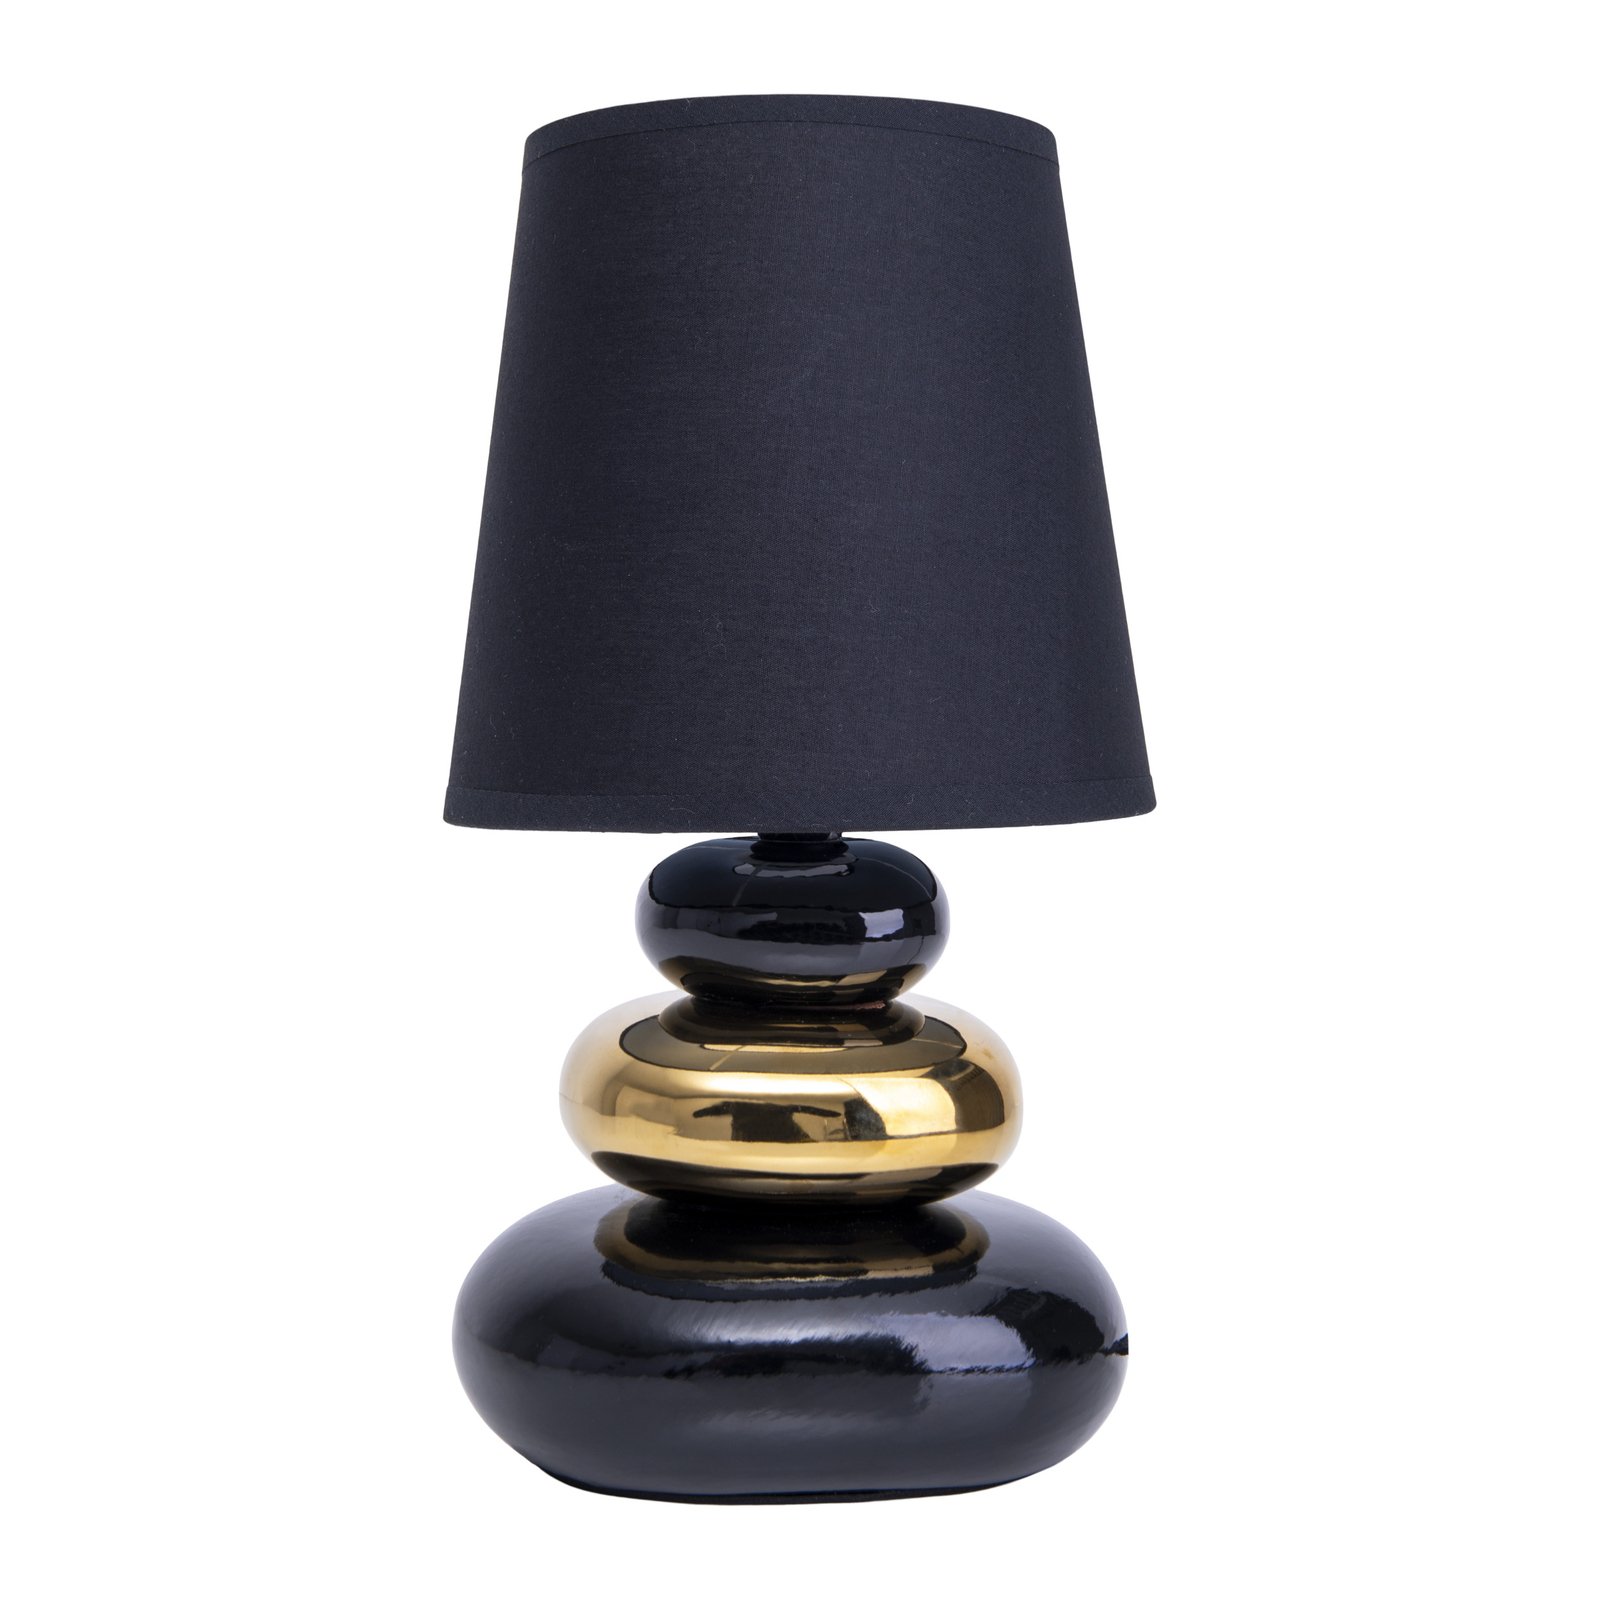 Stoney table lamp, ceramic base, fabric lampshade